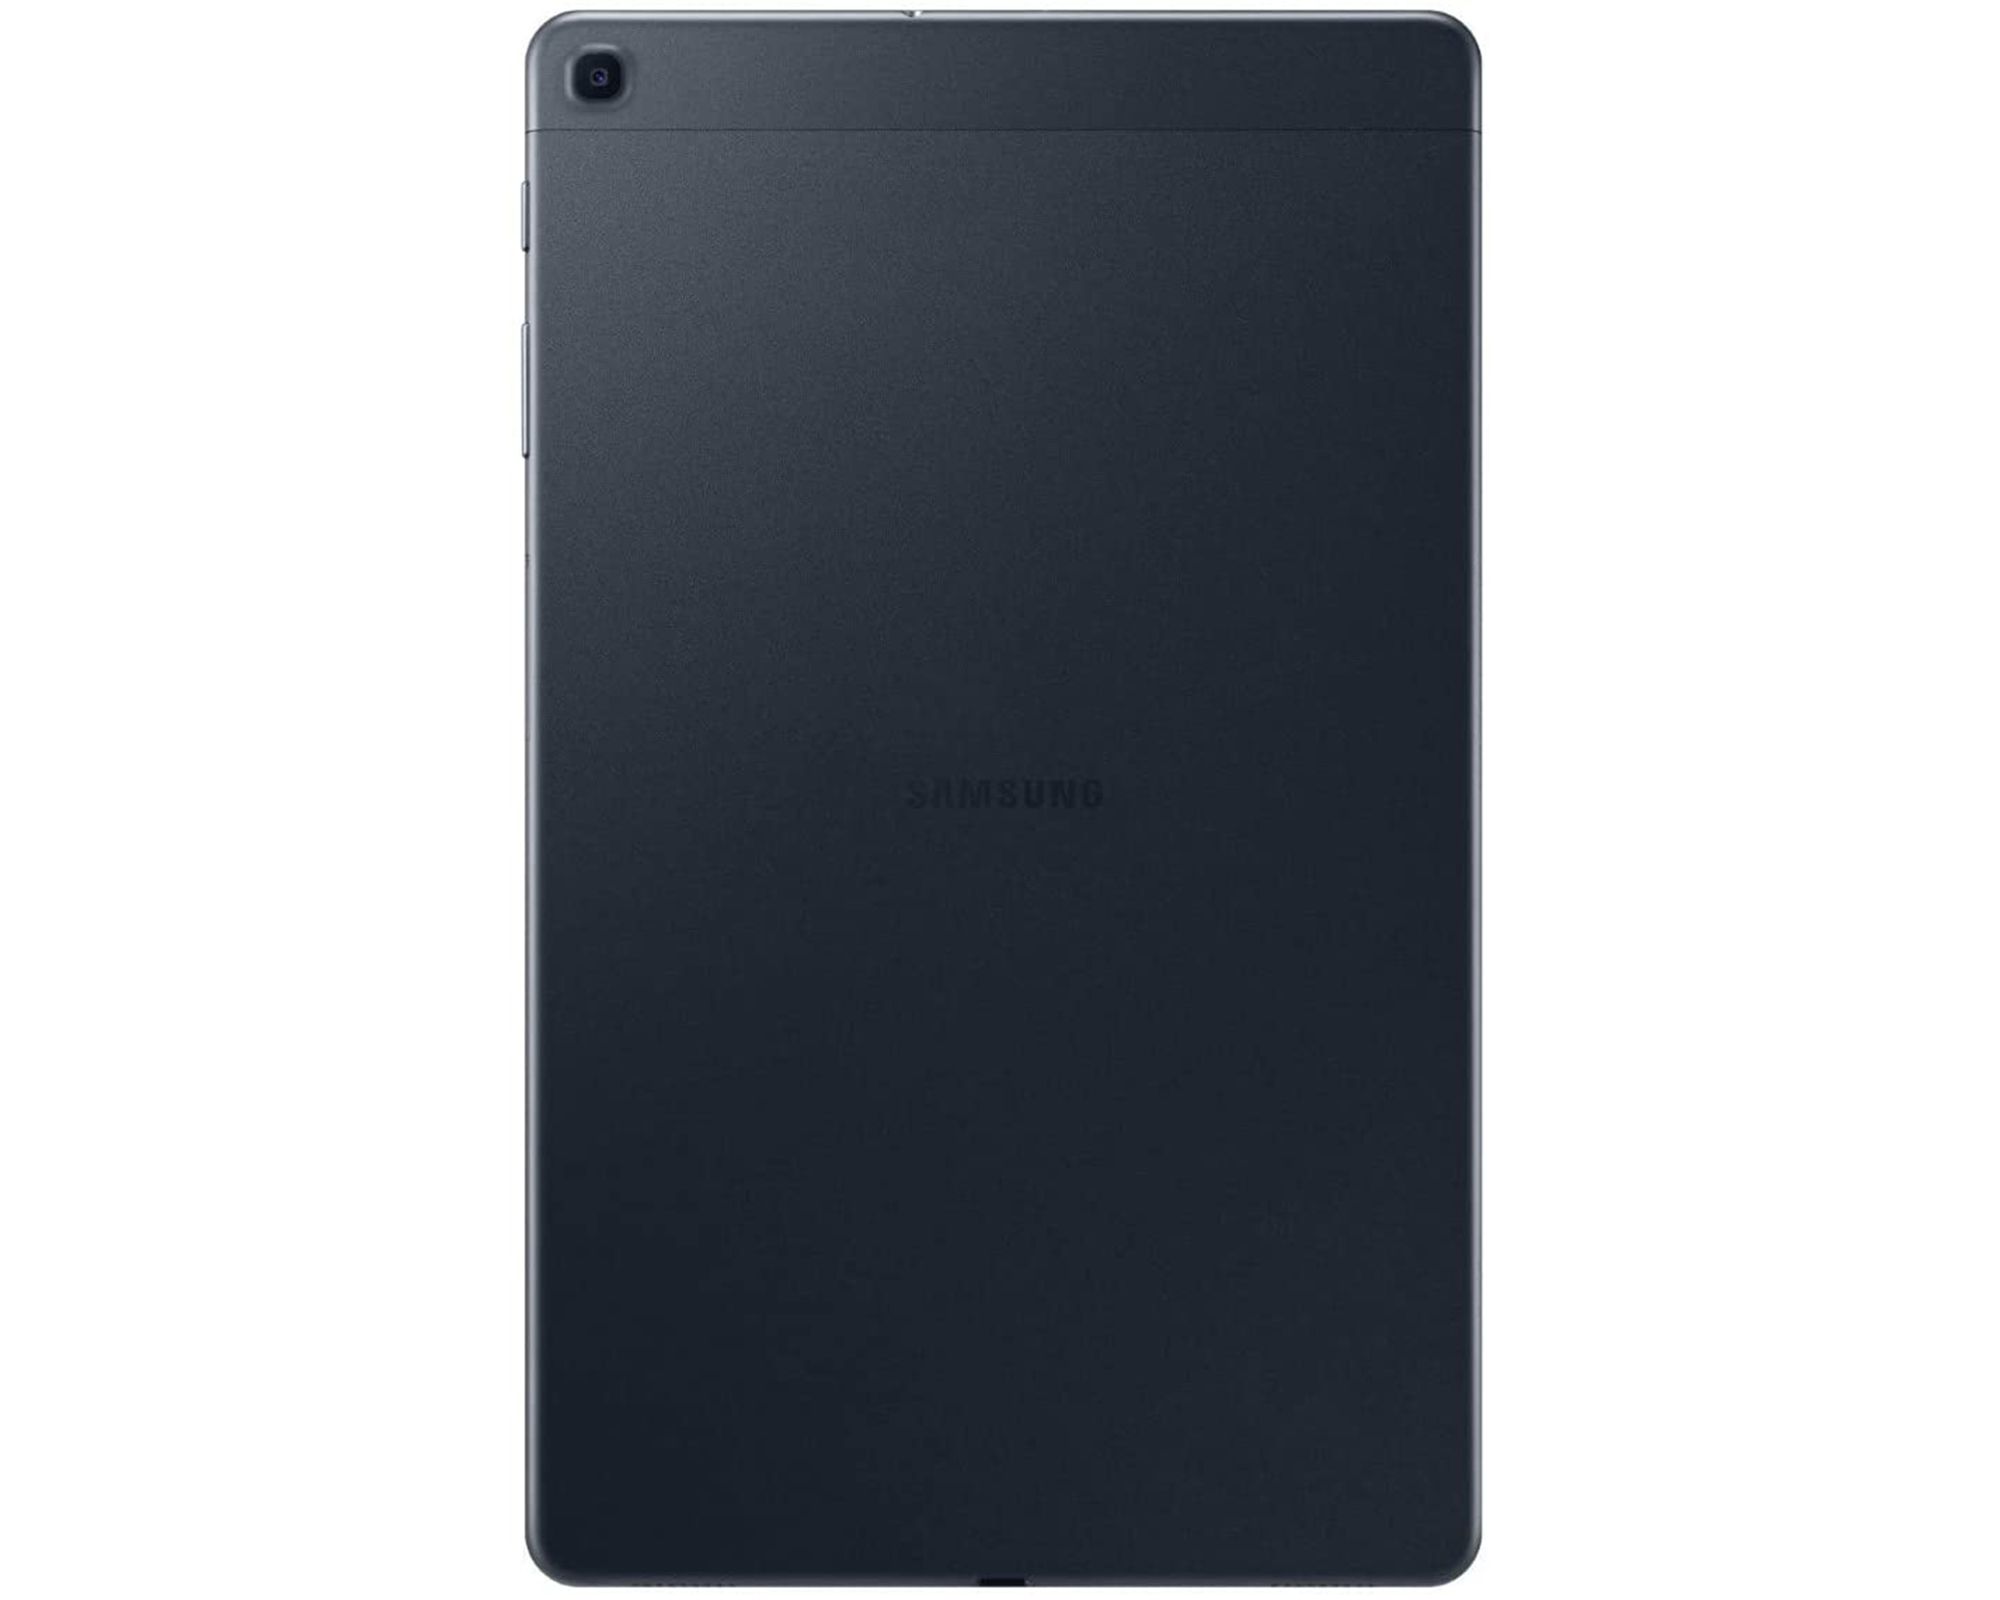 SAMSUNG Galaxy Tab A 10.1" 32GB Tablet, Black - SM-T510NZKAXAR - image 2 of 7